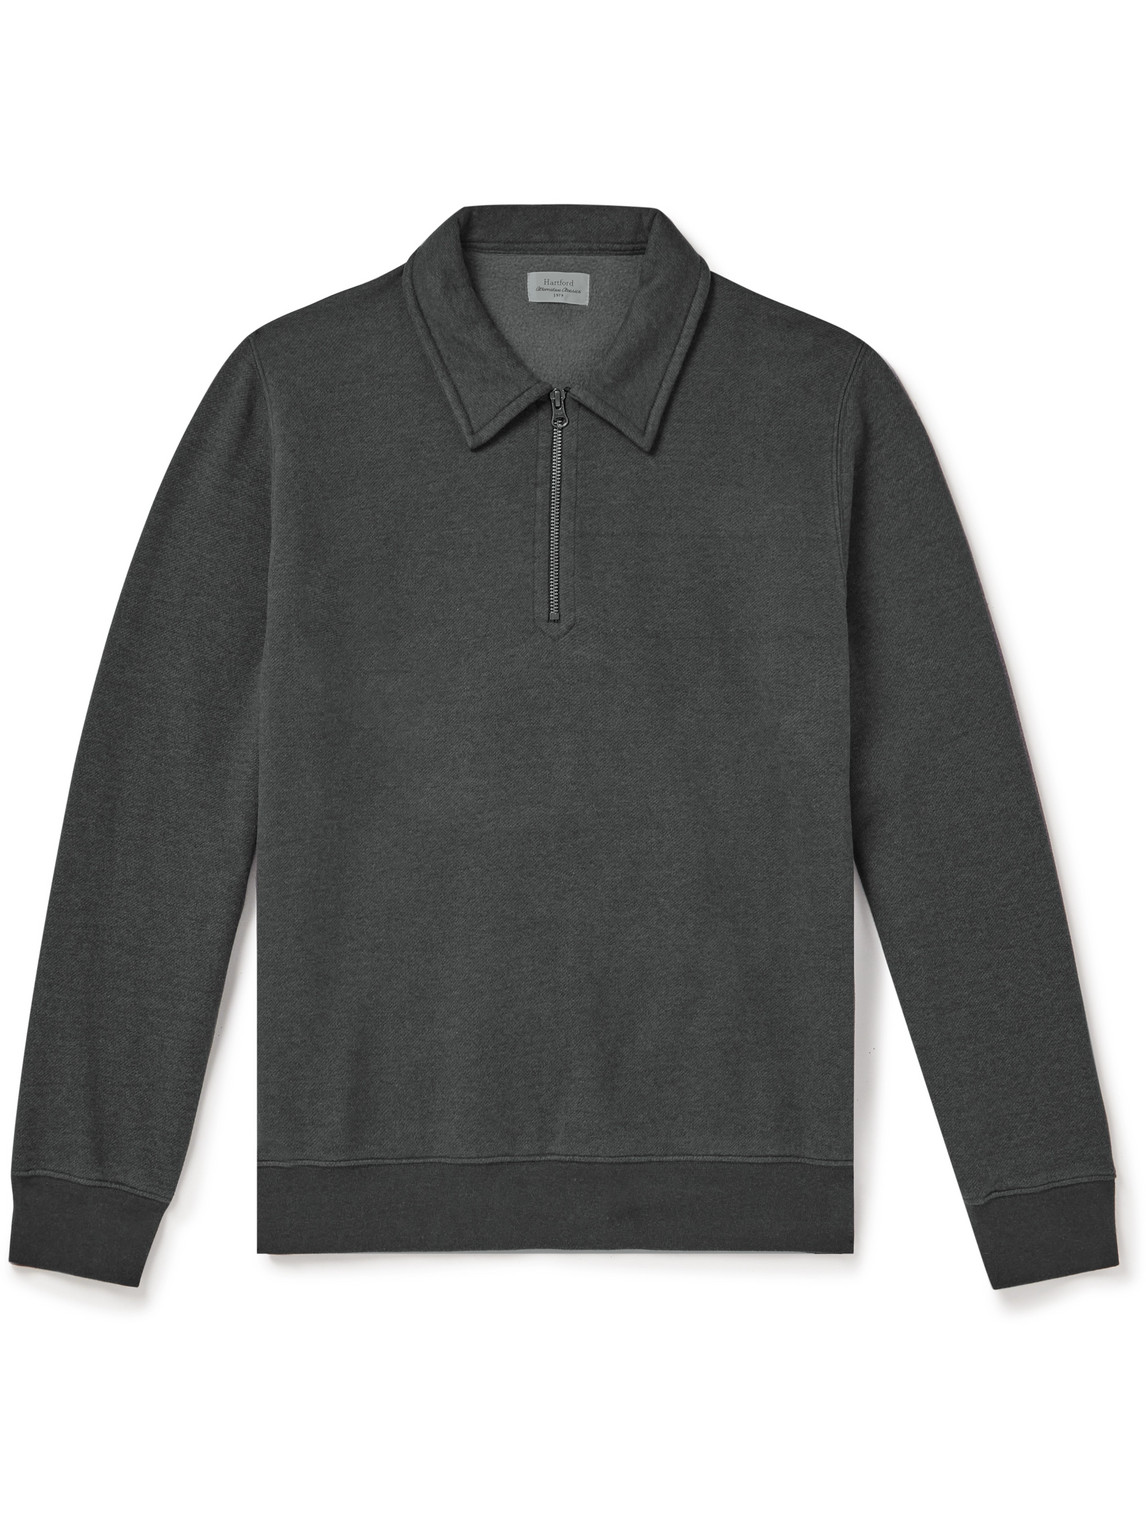 Cotton-Blend Jersey Half-Zip Sweater